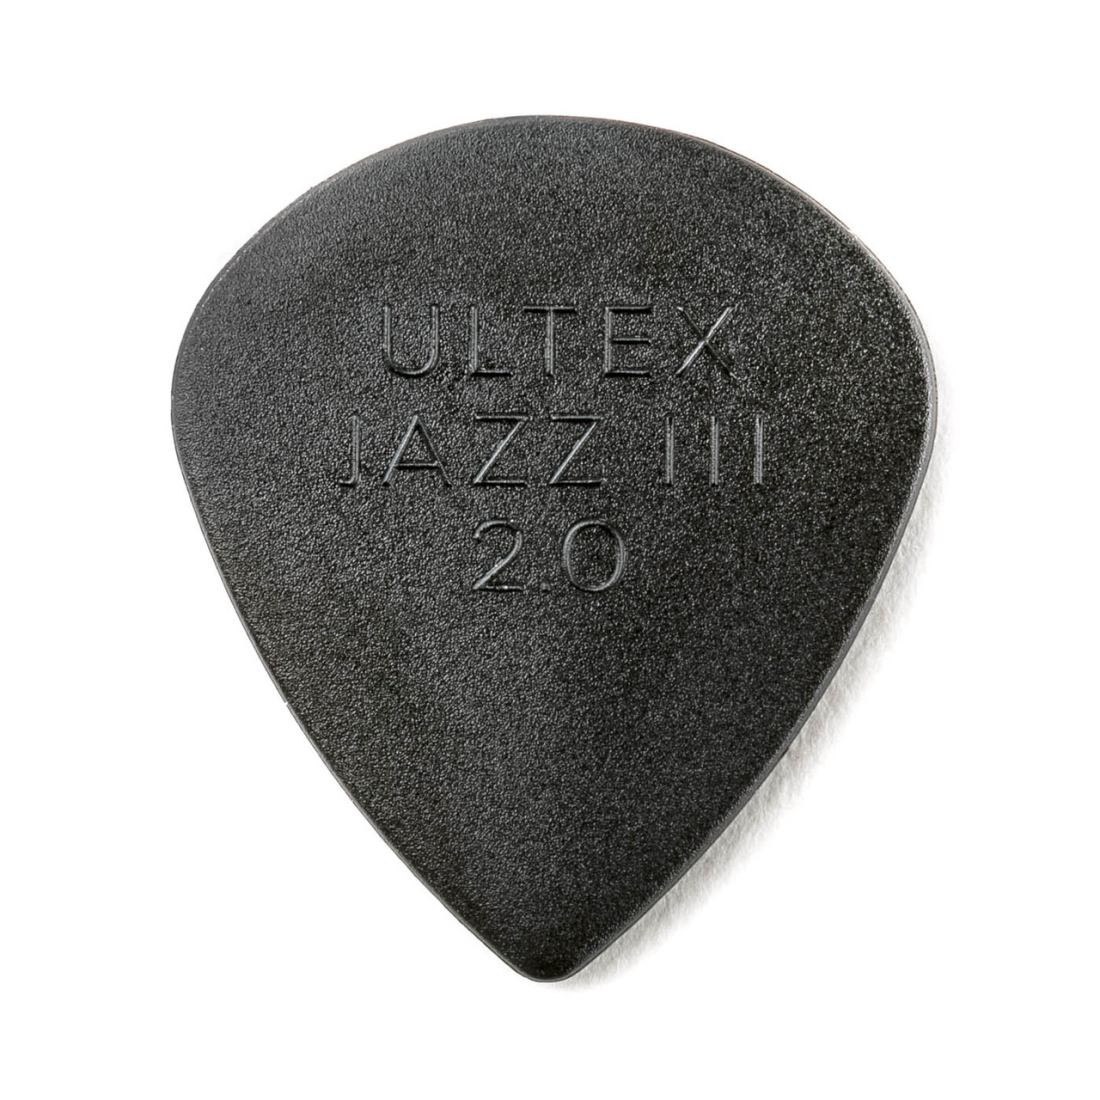 Ultex Jazz III Player Pack (6 Pack) - 2.0mm